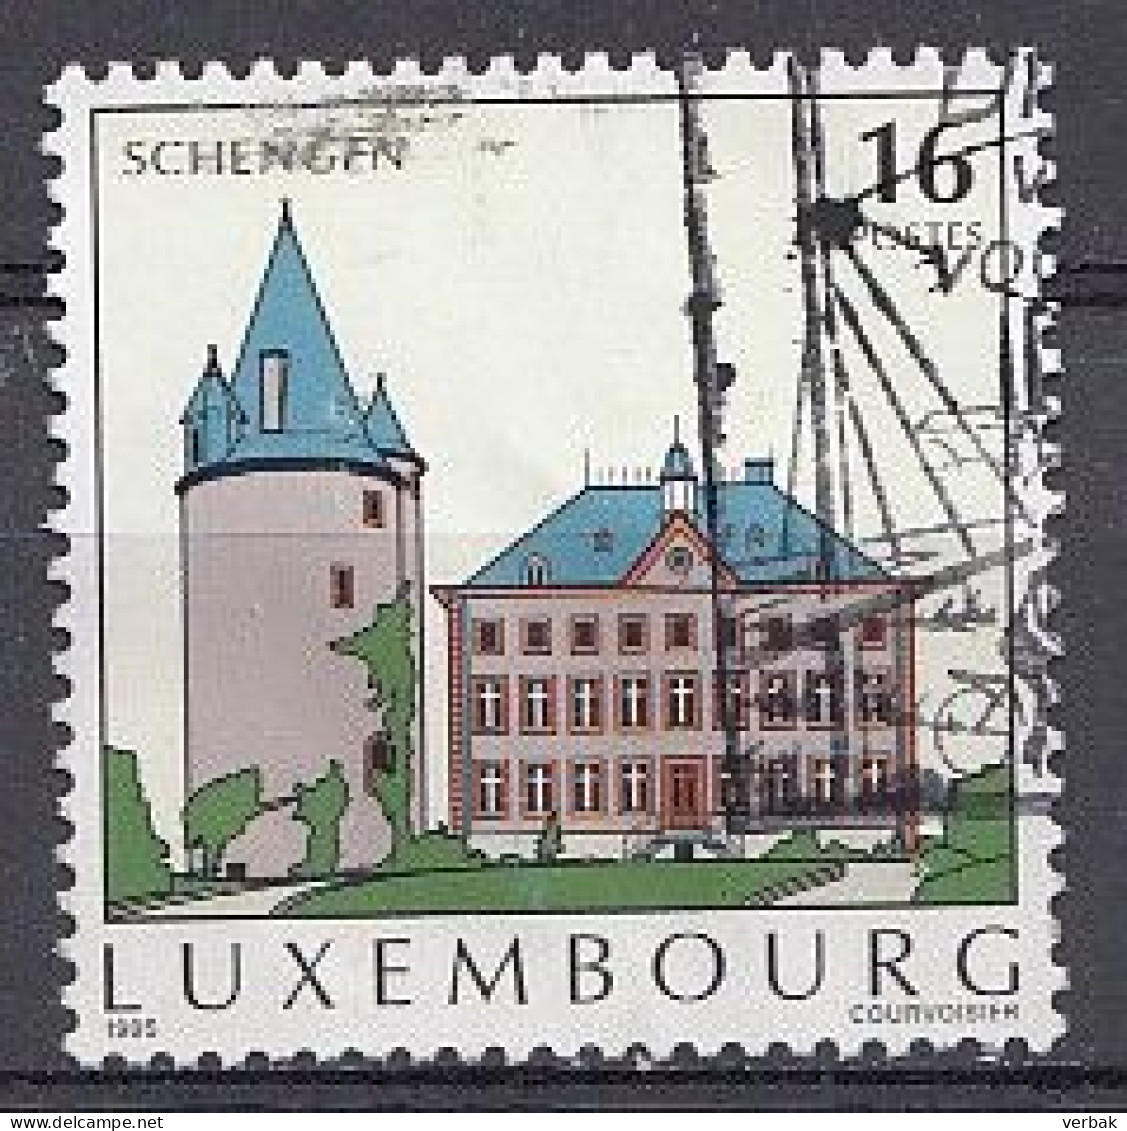 Luxembourg 1995  Mi.nr.:1376  Sehenswürdigkeiten  Oblitérés / Used / Gestempeld - Oblitérés